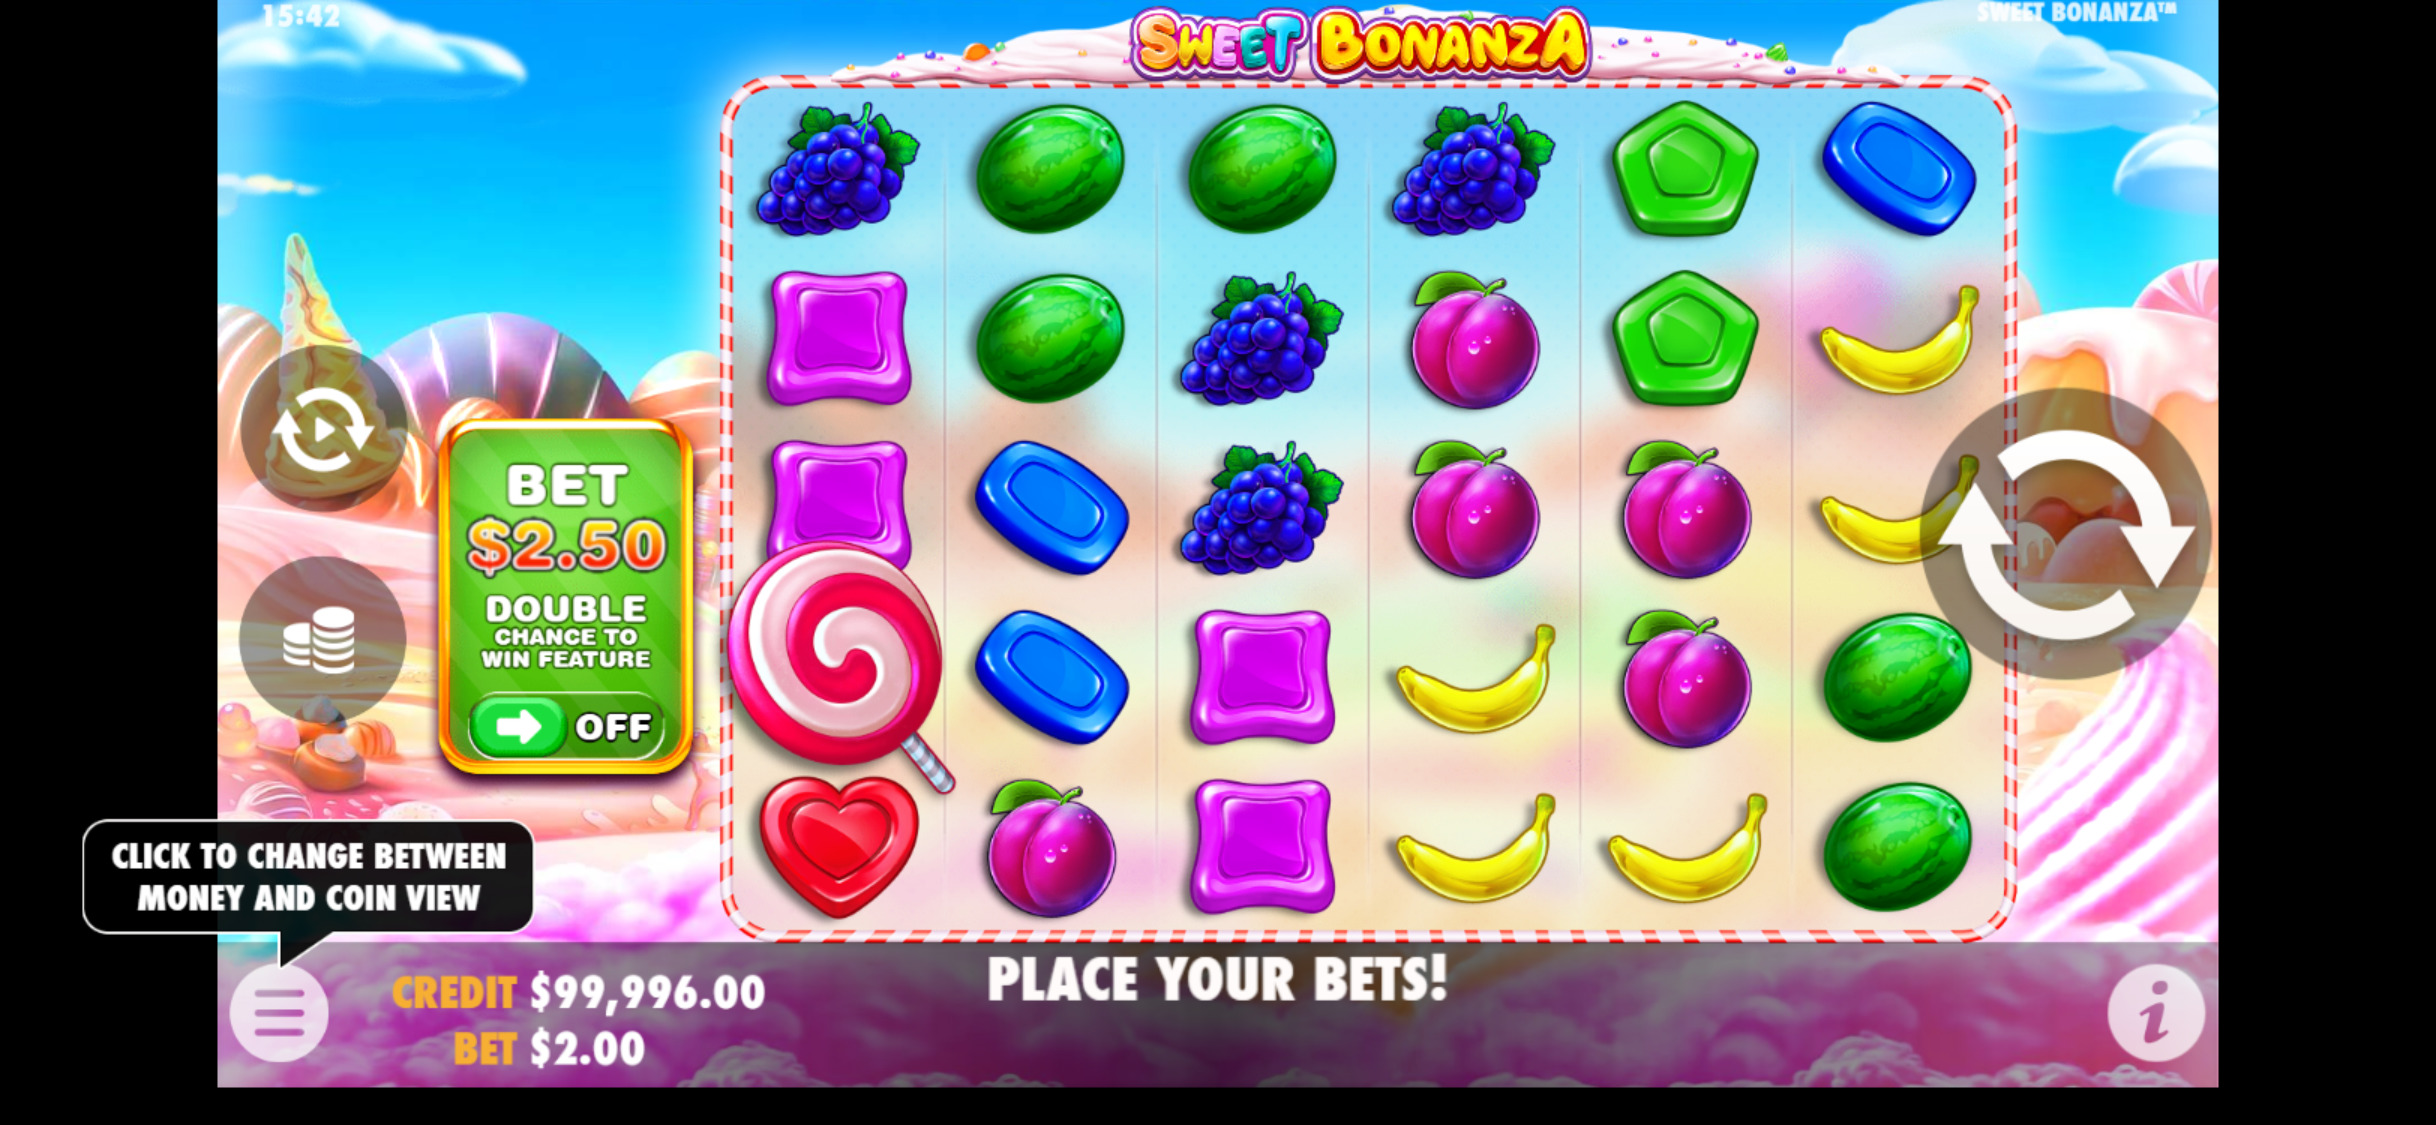 Pocket Casino Mobile Slot Games Review